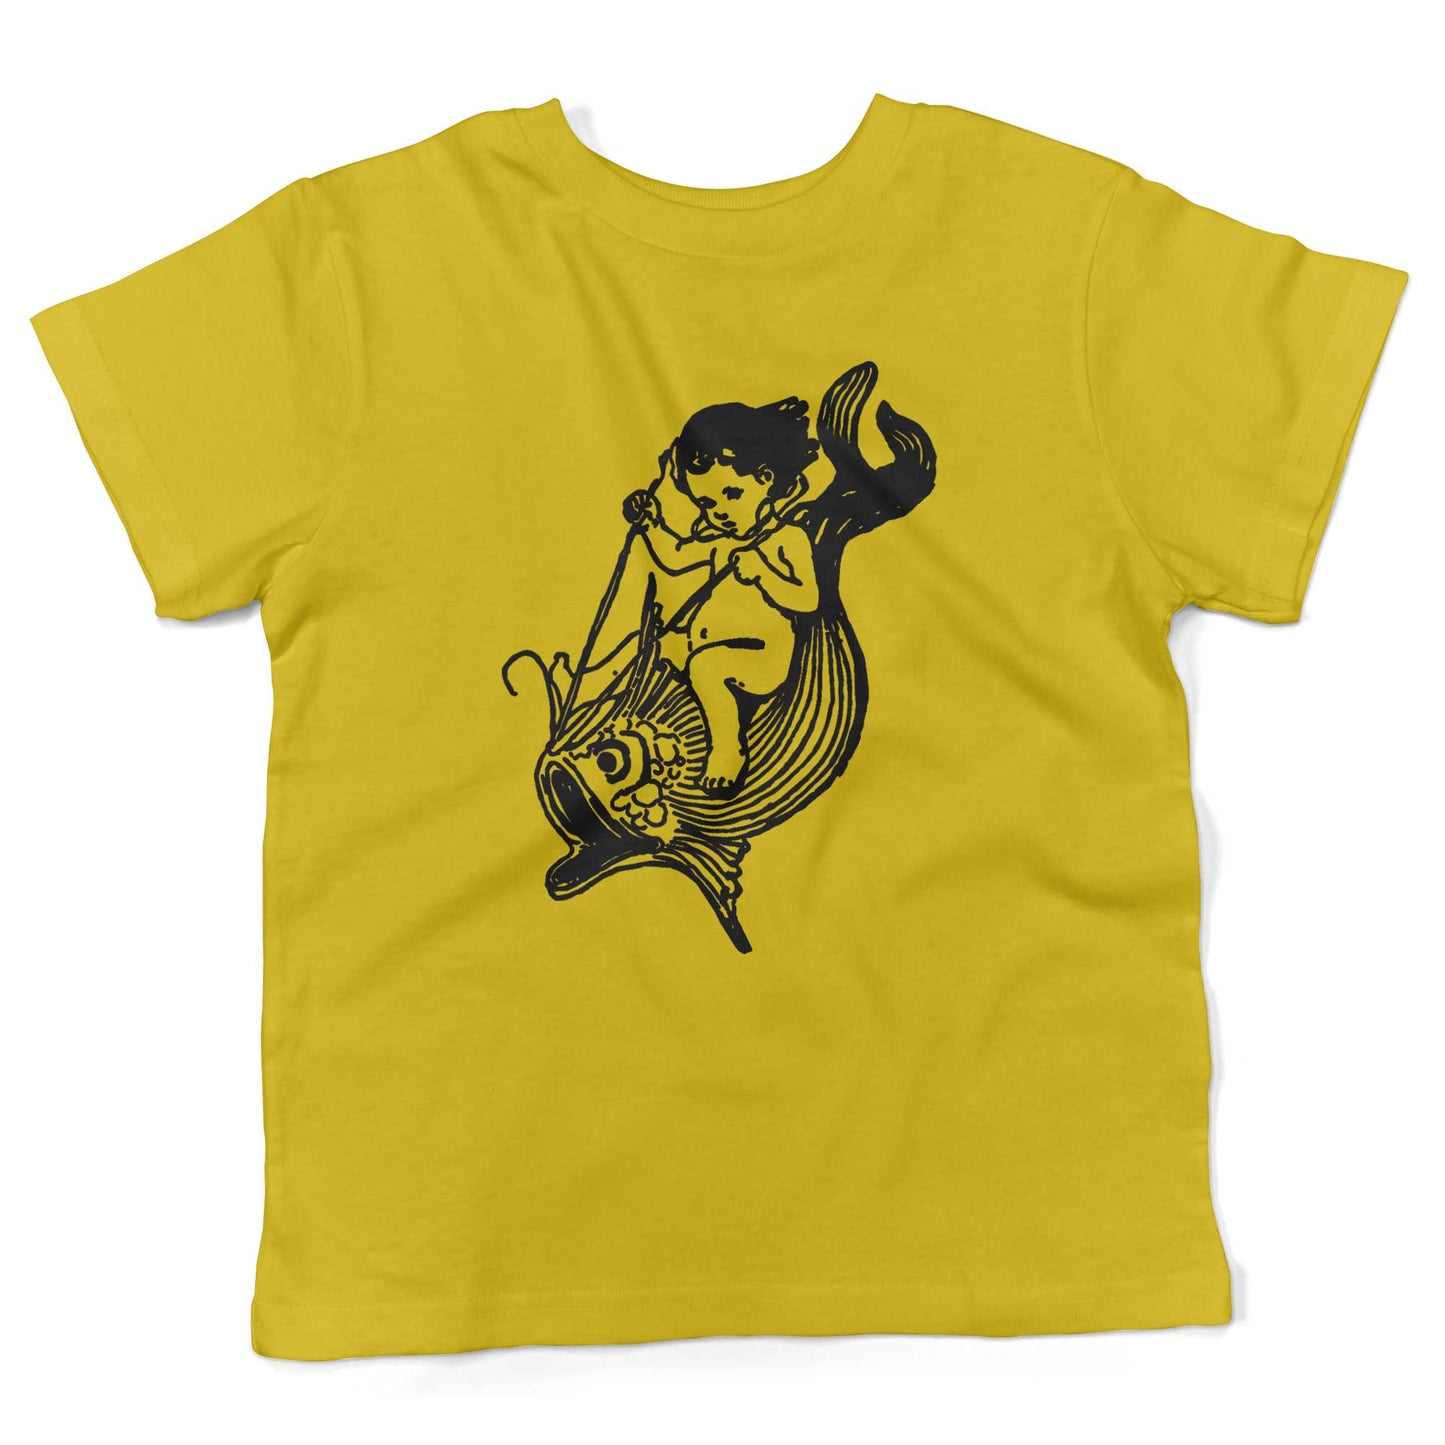 Water Baby Riding A Giant Fish Toddler Shirt-Sunshine Yellow-2T